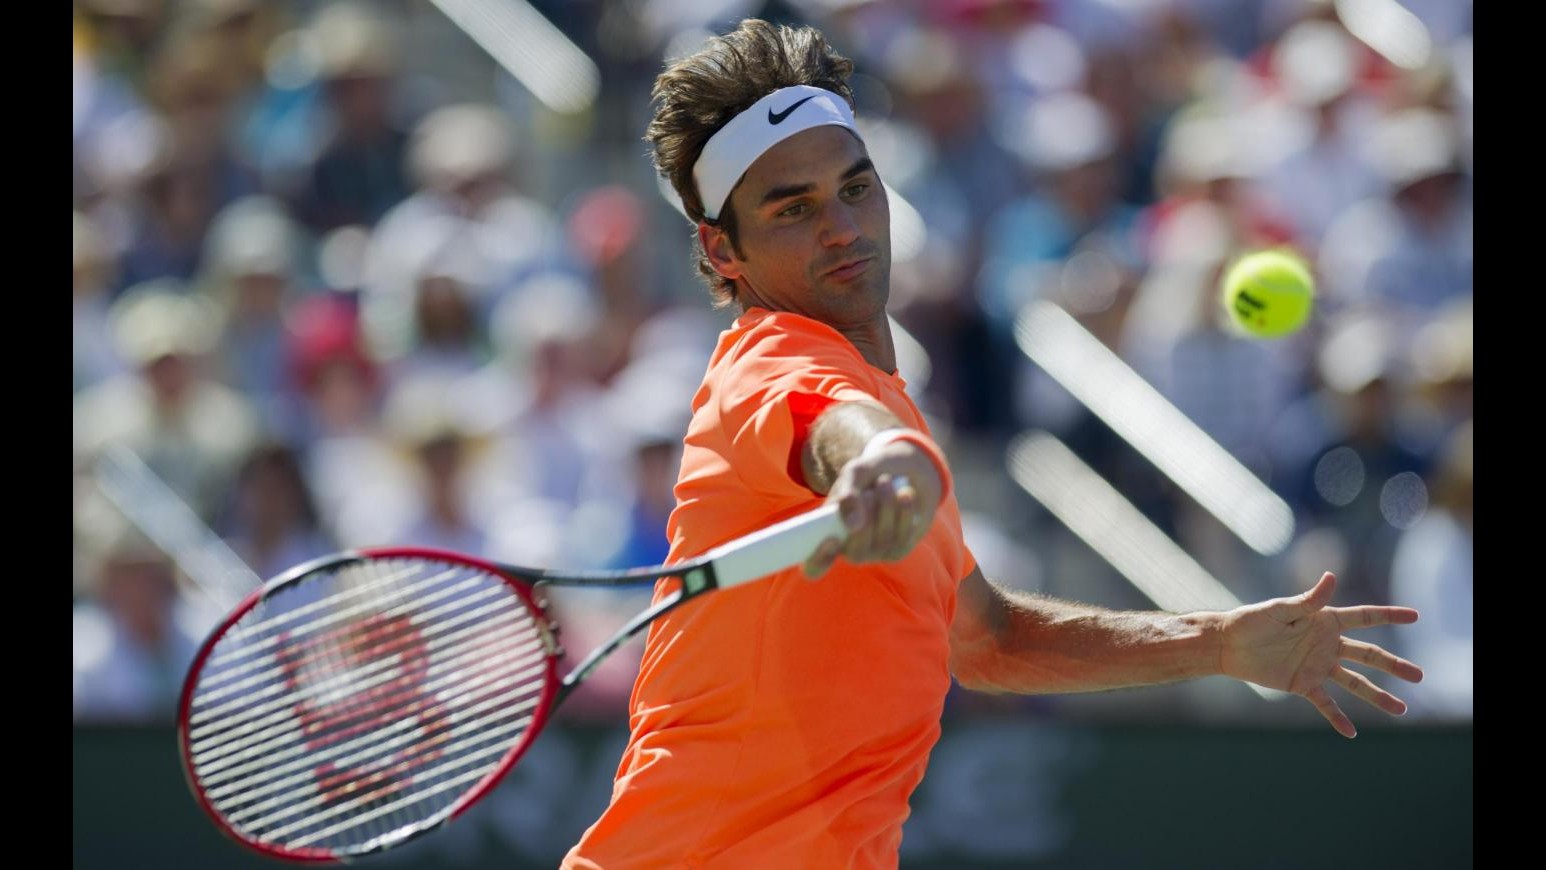 Tennis, Atp Montecarlo: Federer fuori contro Monfils, Djokovic e Nadal ai quarti